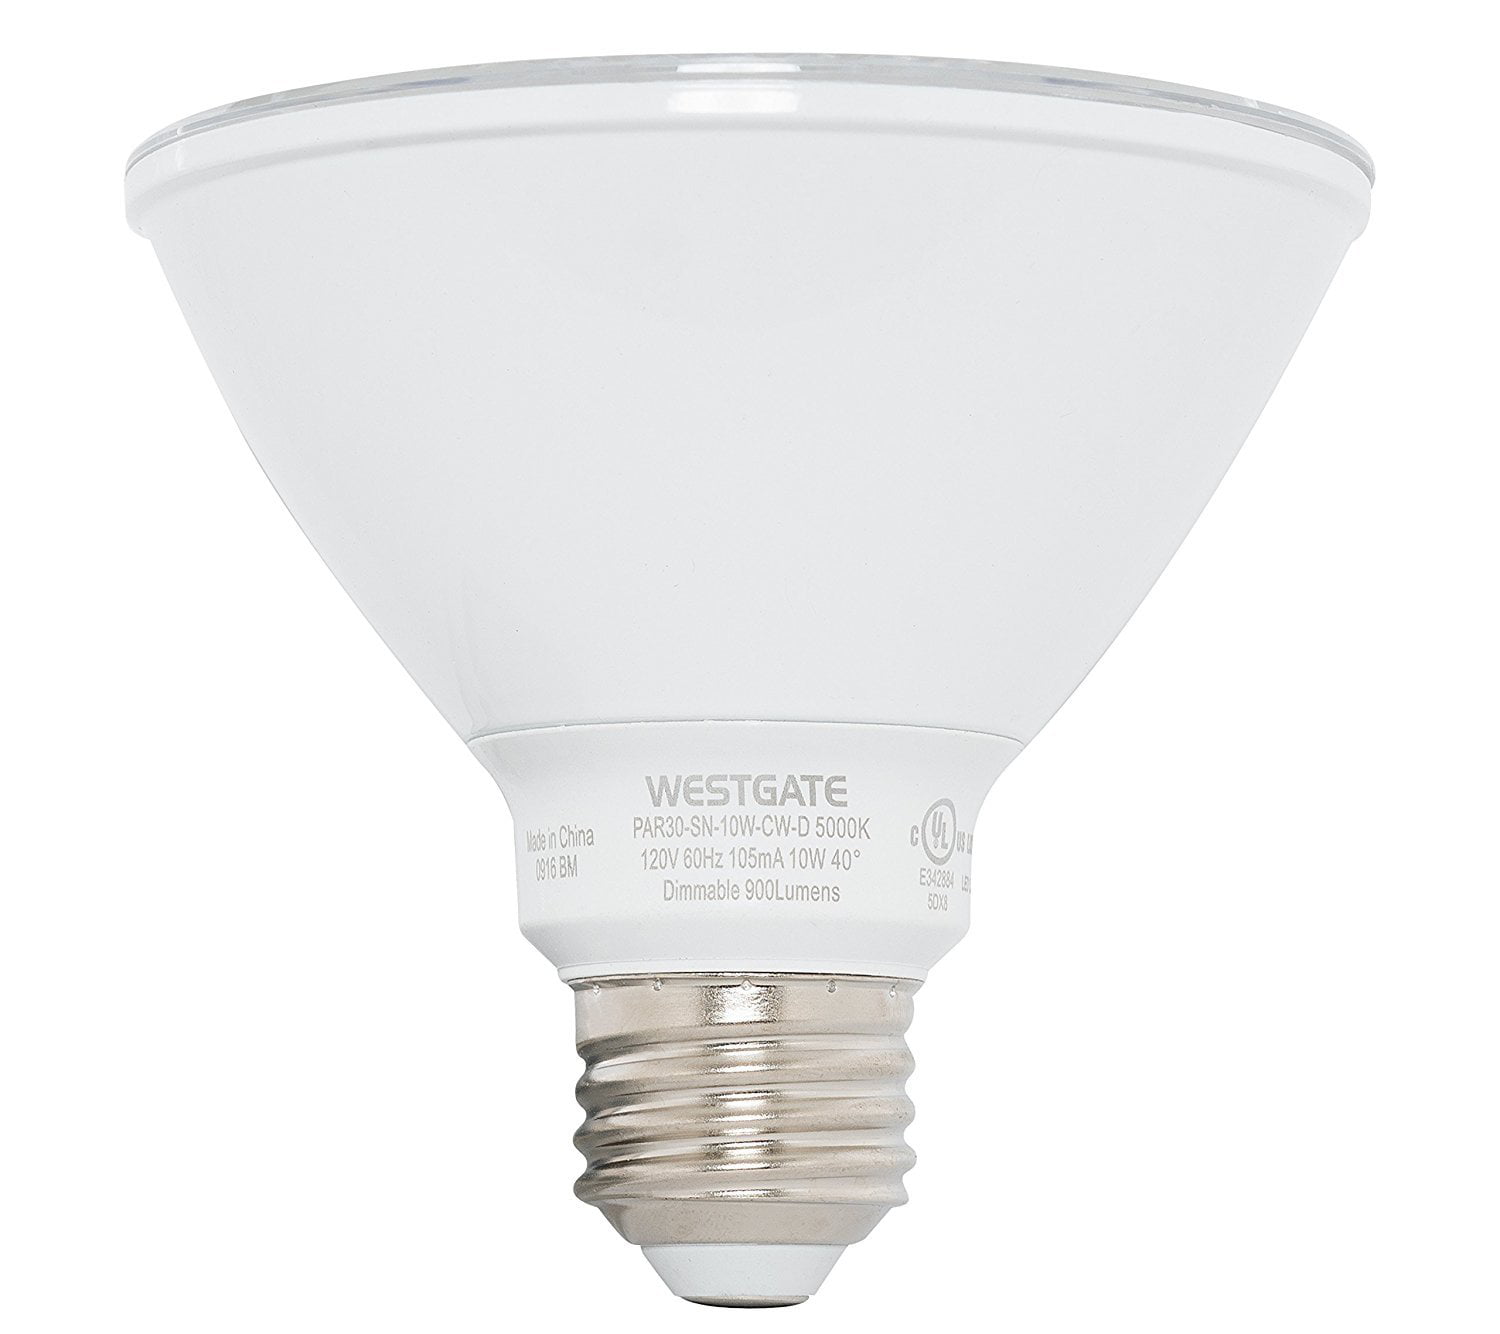 Westgate Lighting Par30 10w Dimmable Led Light Bulb Short Neck Best Indoor Outdoor Flood Spot Lamp For Home Office Kitchen Ul Listed E26 Base 4 Pack 3000k Warm White